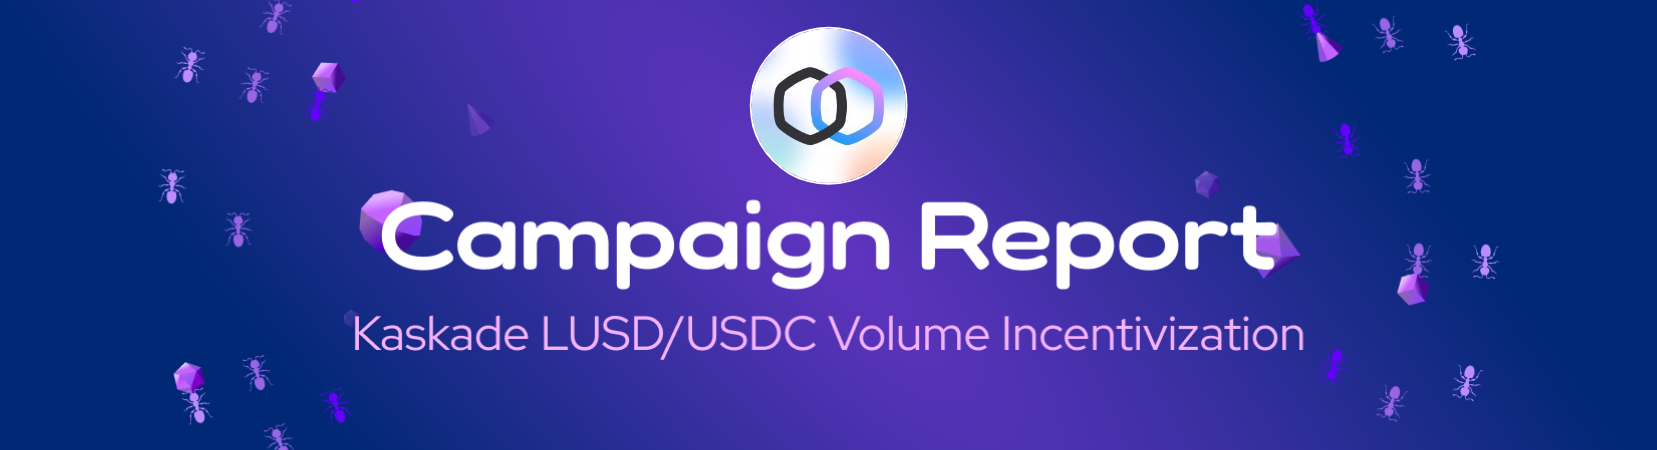 Kaskade LUSD Volume Incentivization Campaign Report